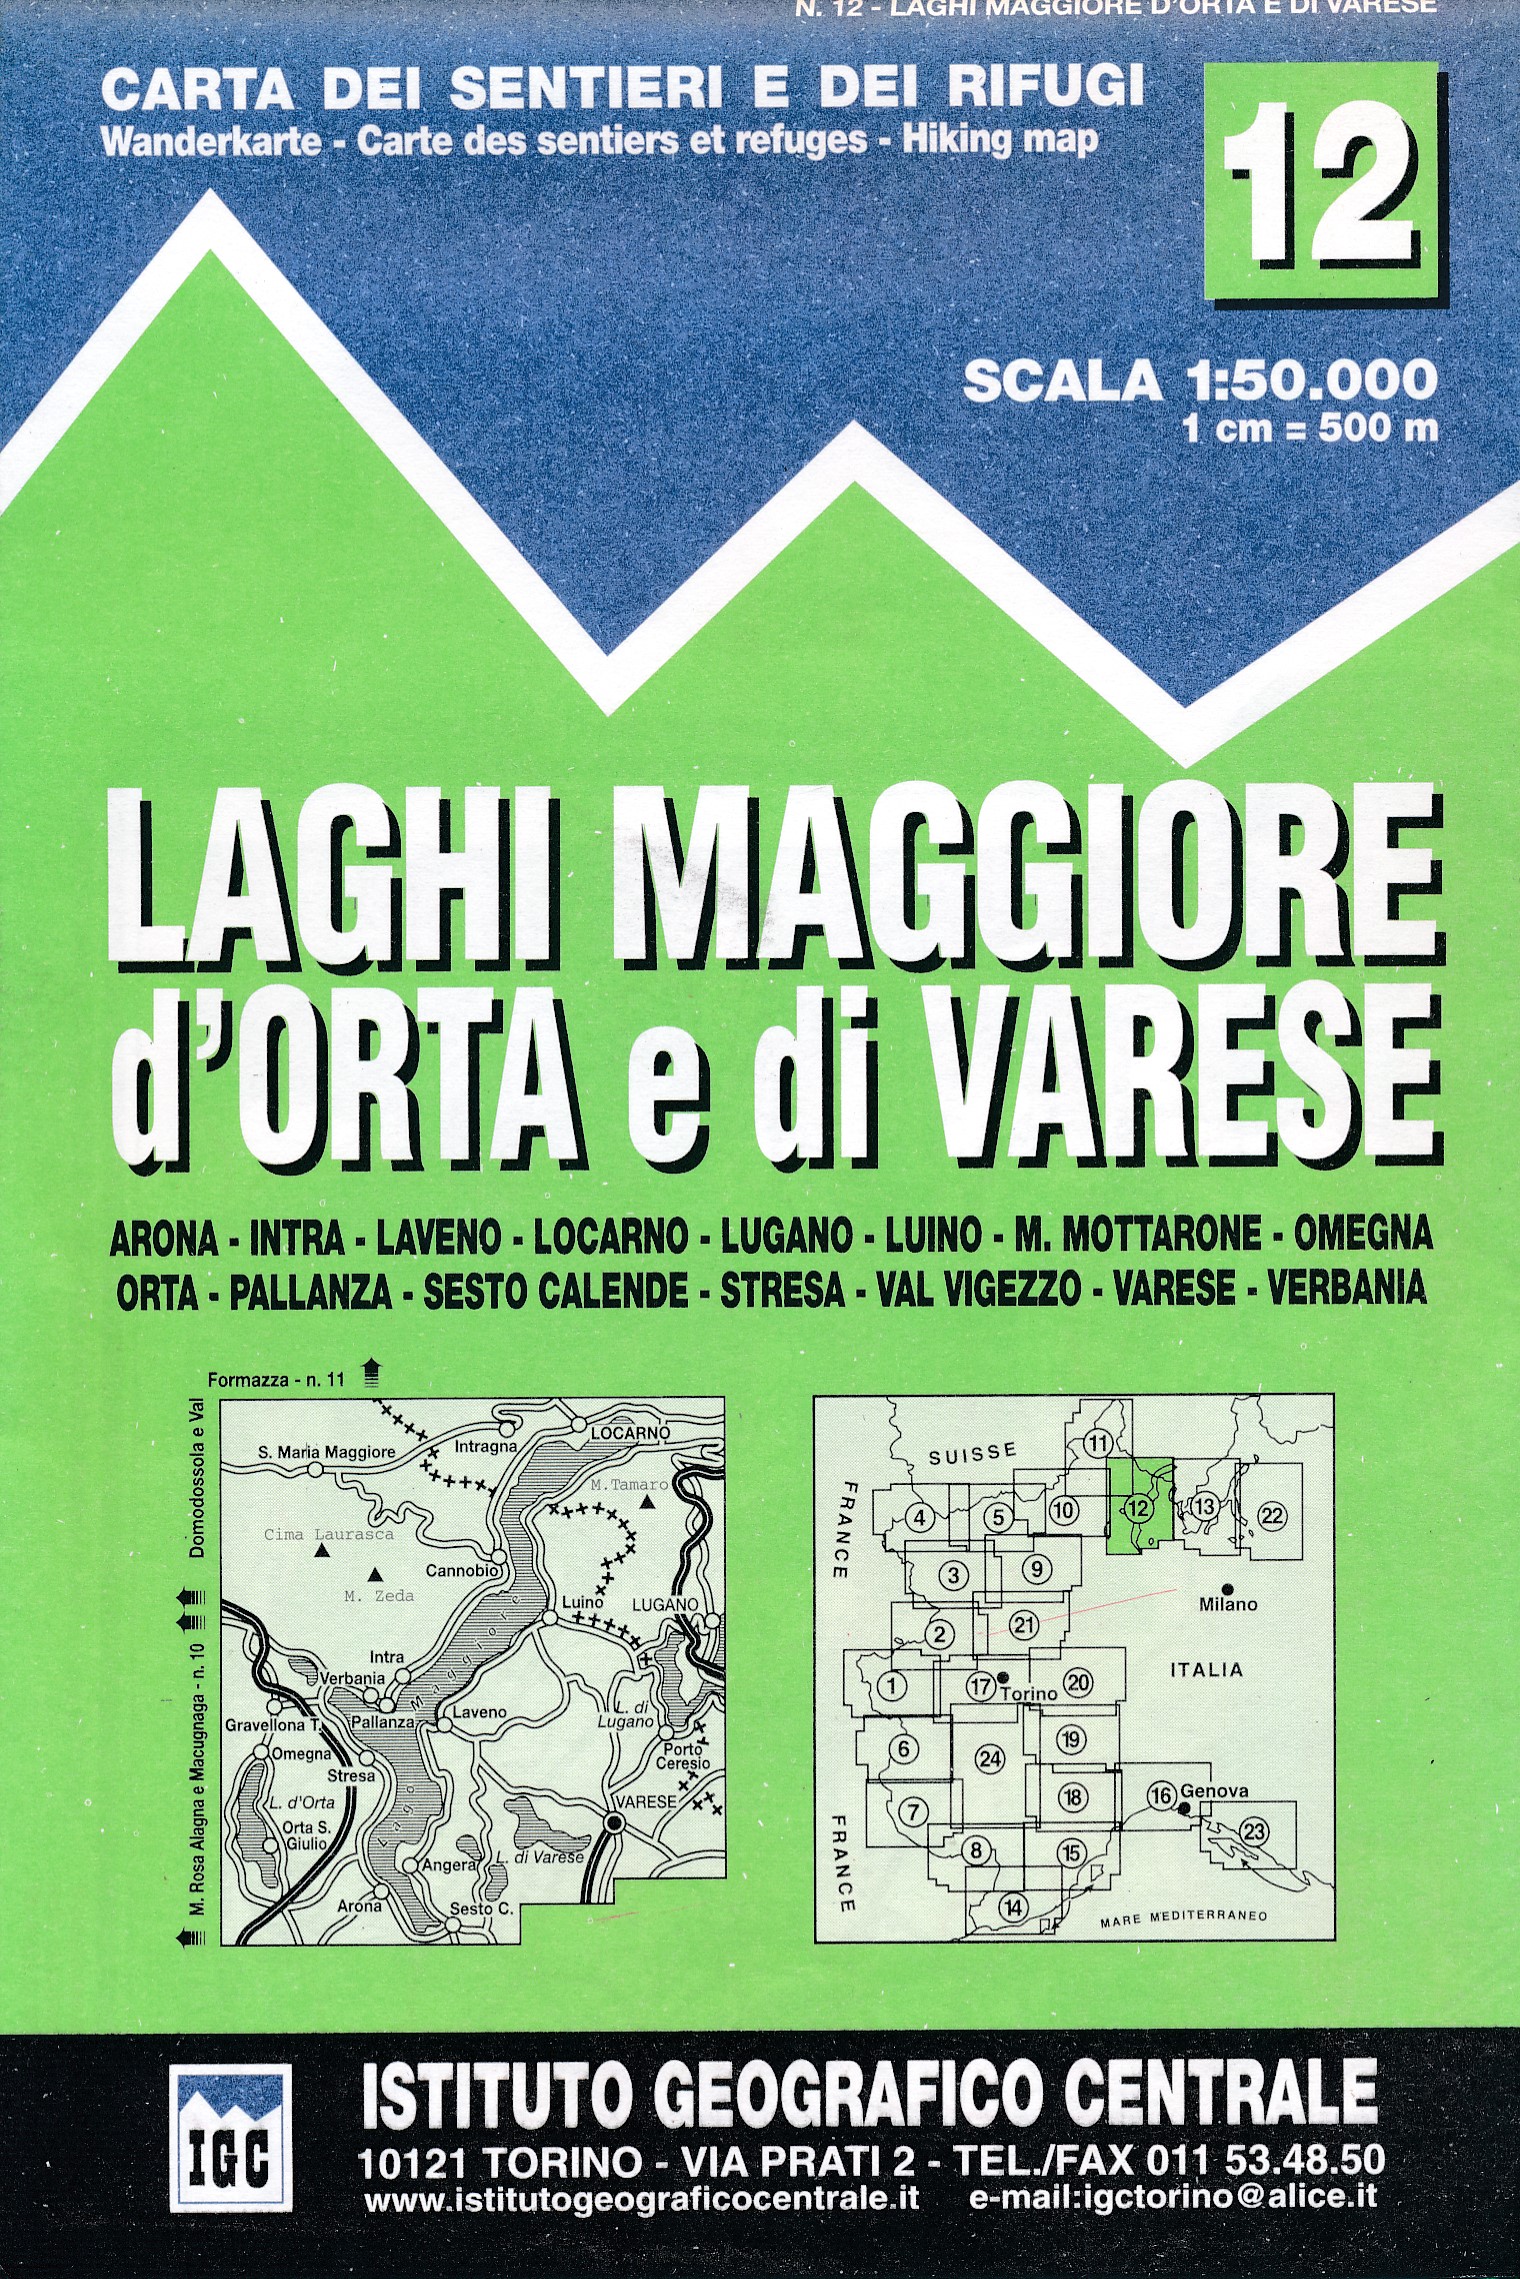 Online bestellen: Wandelkaart 12 Laghi Maggiore, d'Orta e di Varese | IGC - Istituto Geografico Centrale